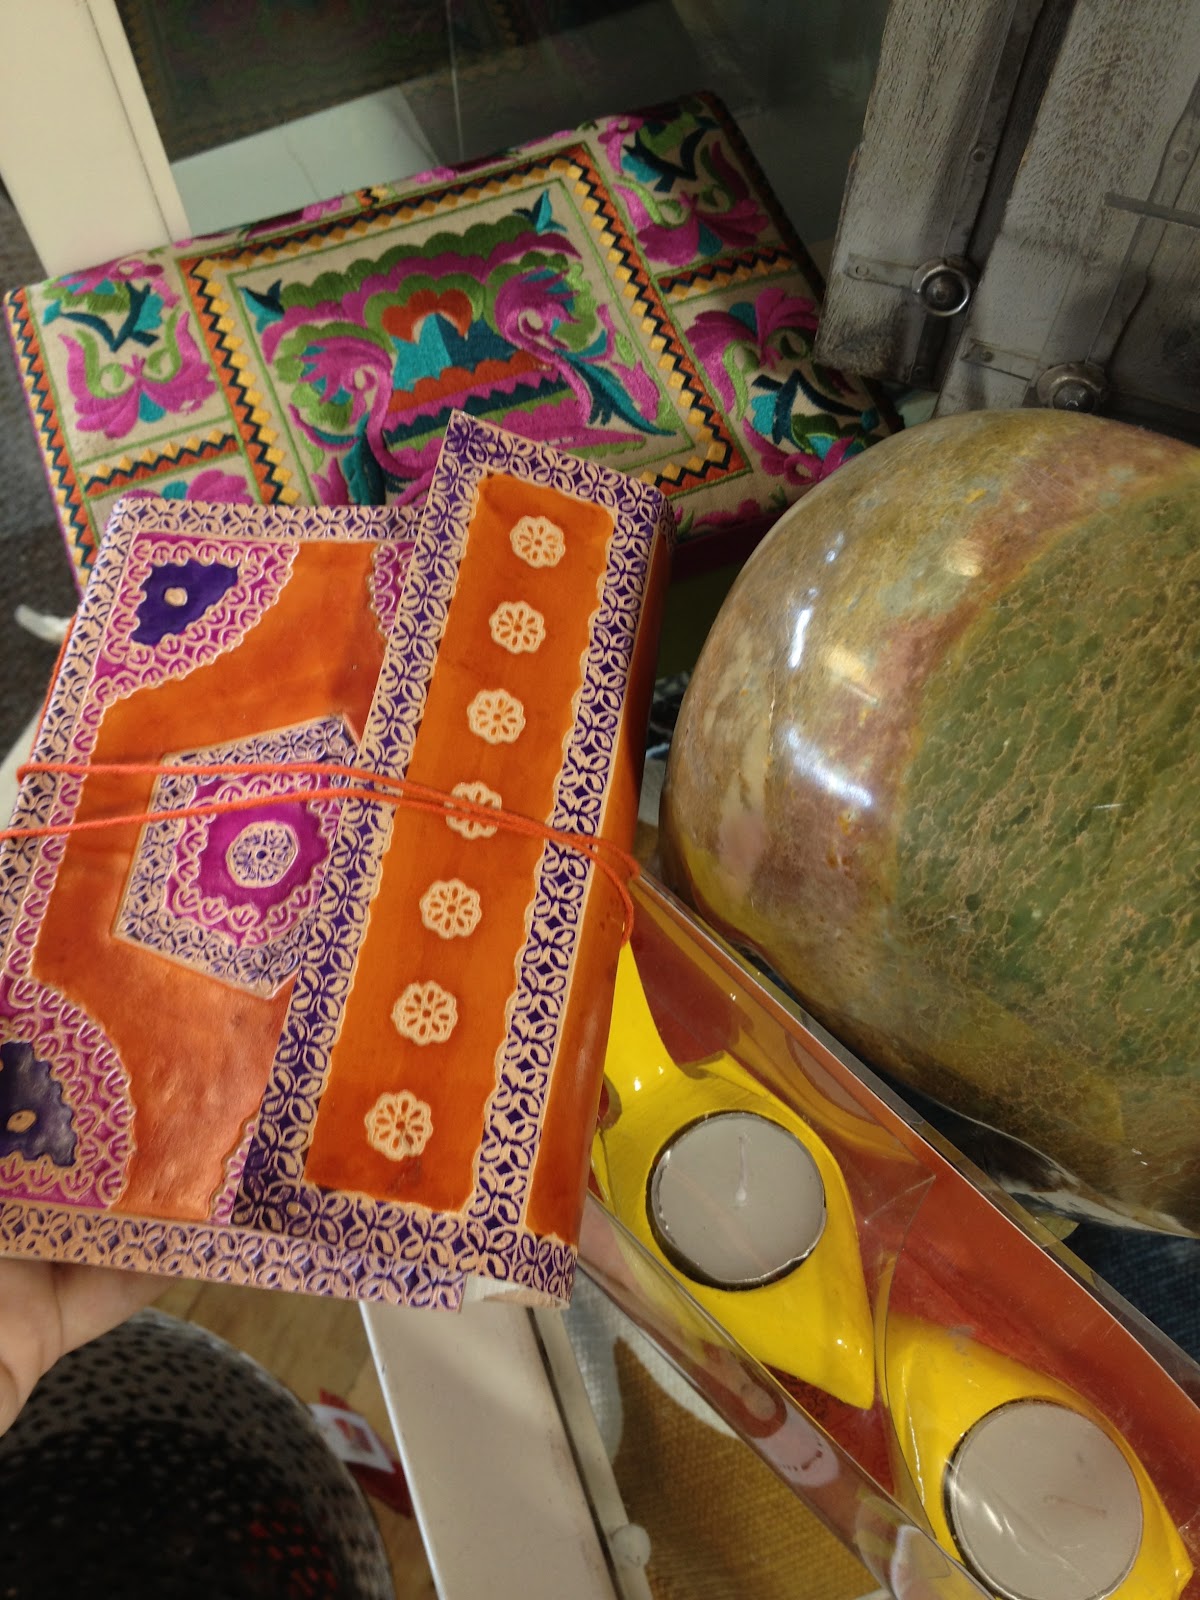 The Indian Bazaar is at TJMaxx Homegoods!